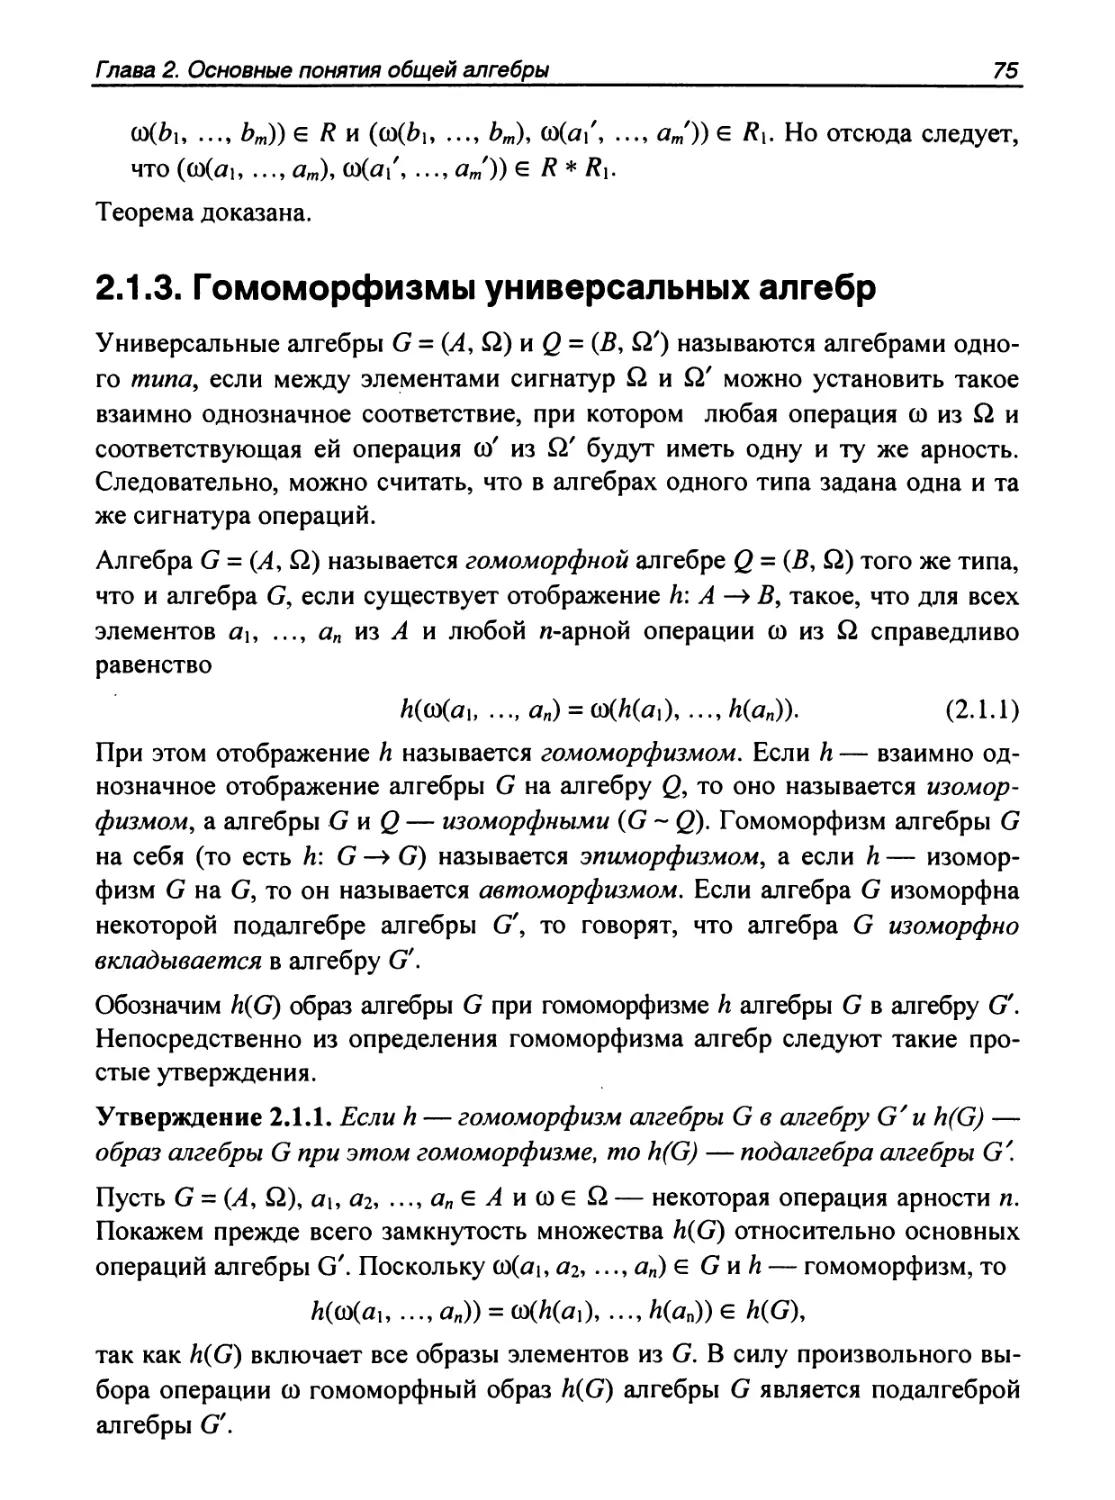 2.1.3. Гомоморфизмы универсальных алгебр